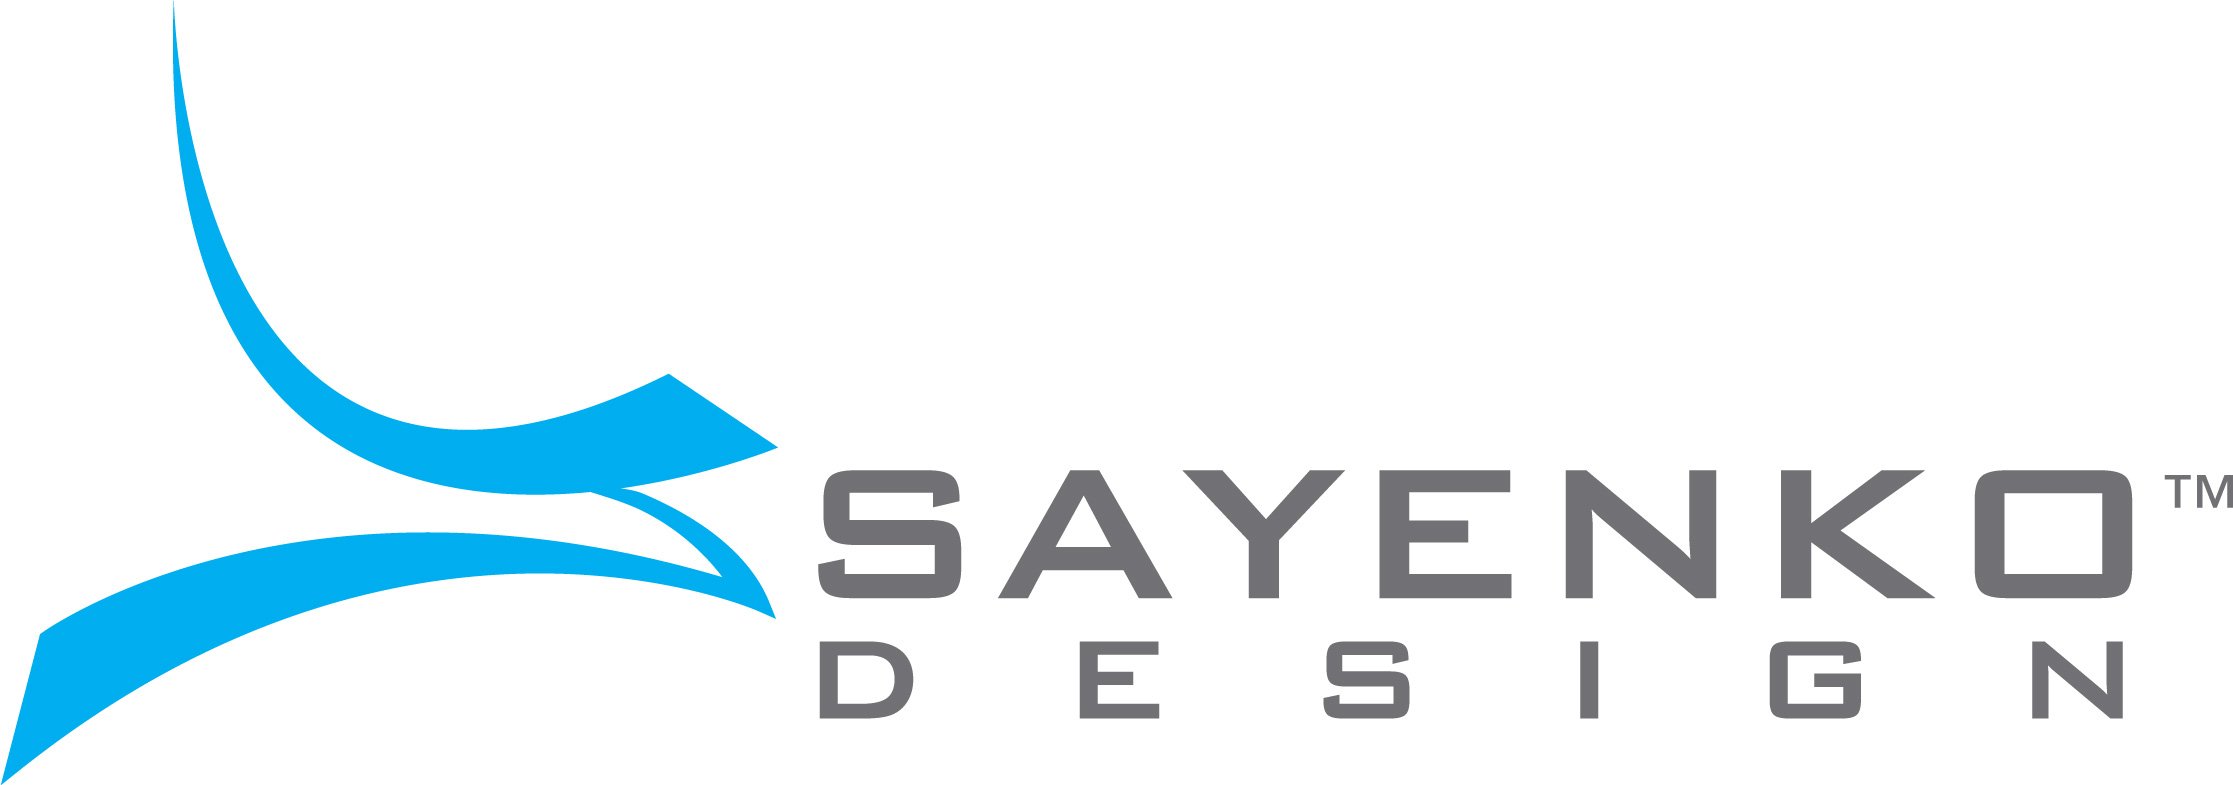 Best Web Development Business Logo: Sayenko Design